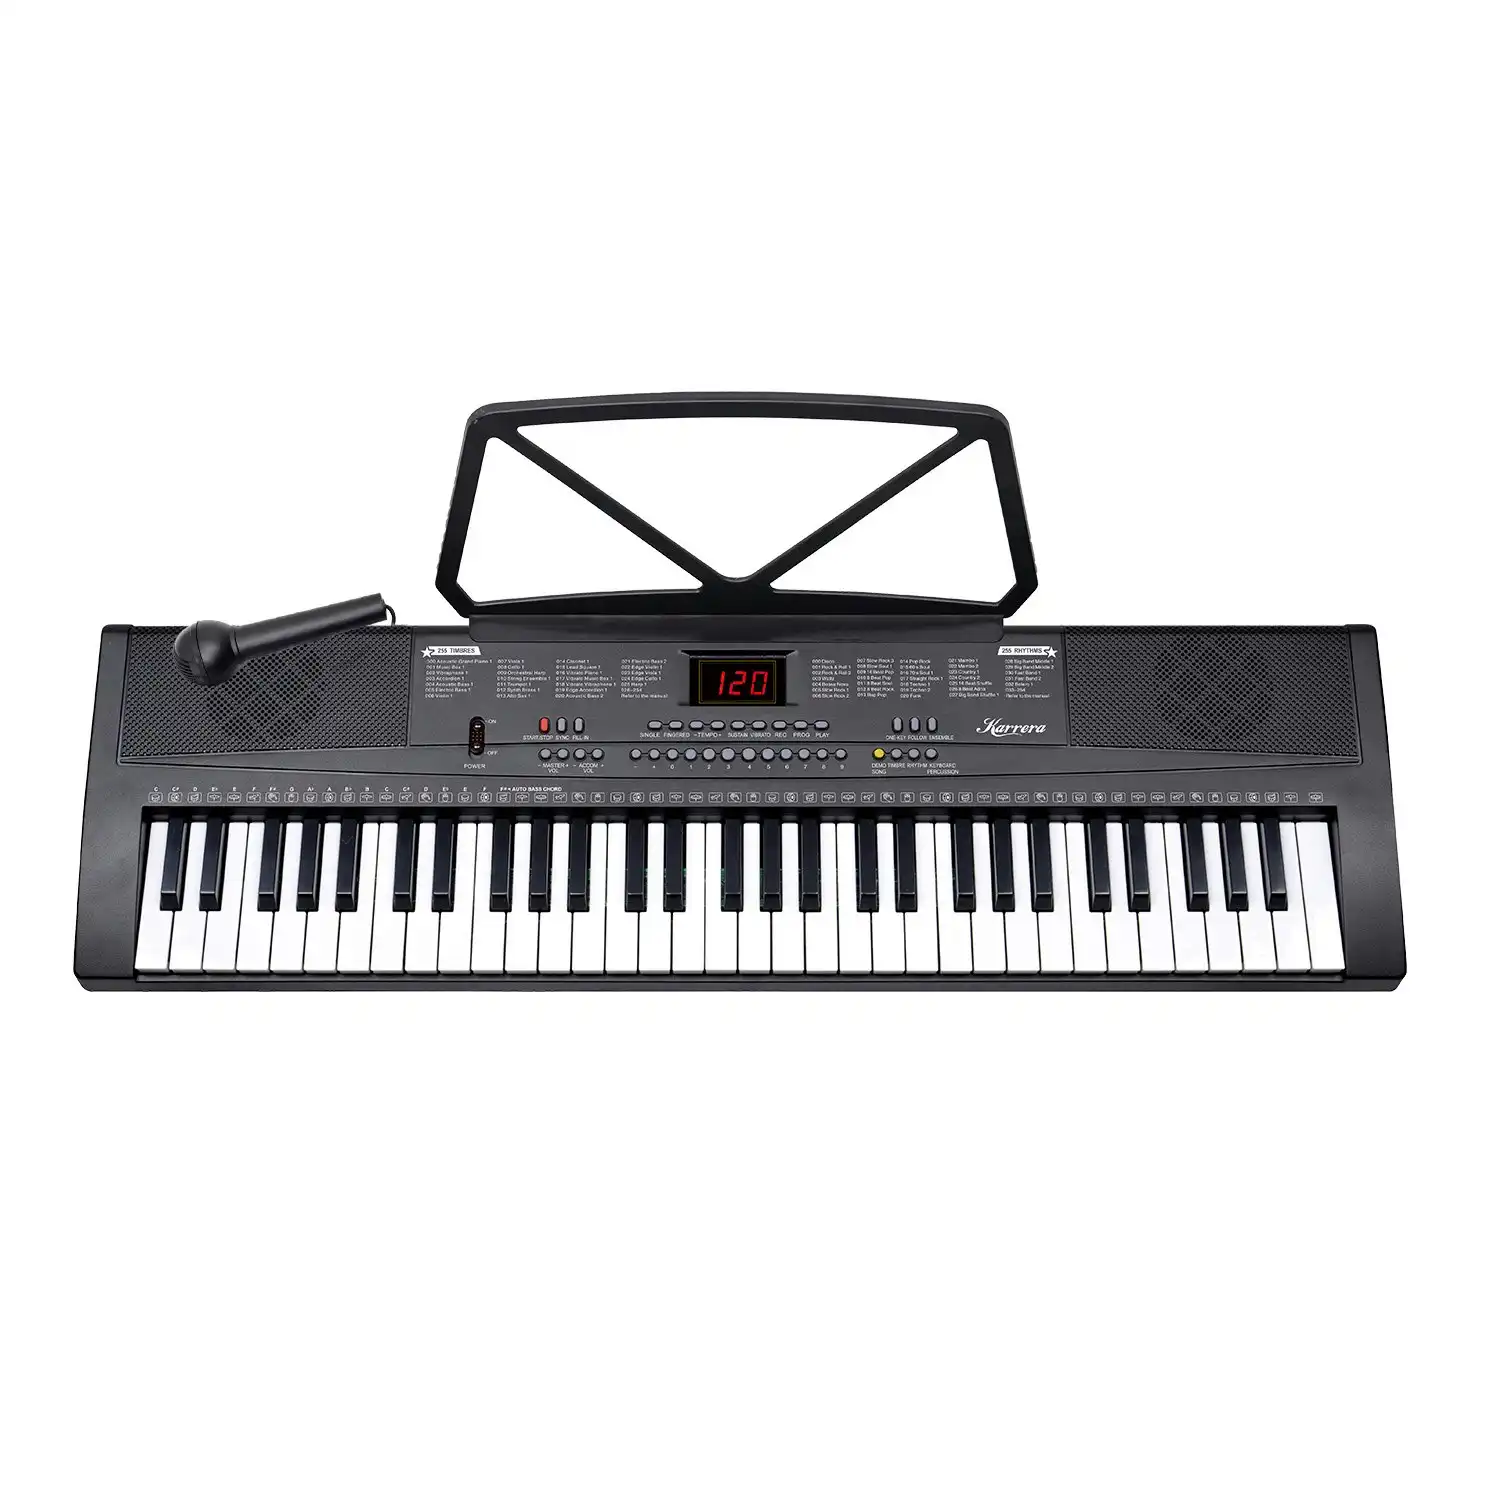 Karrera 61-Key Electronic Piano Keyboard 75cm - Black